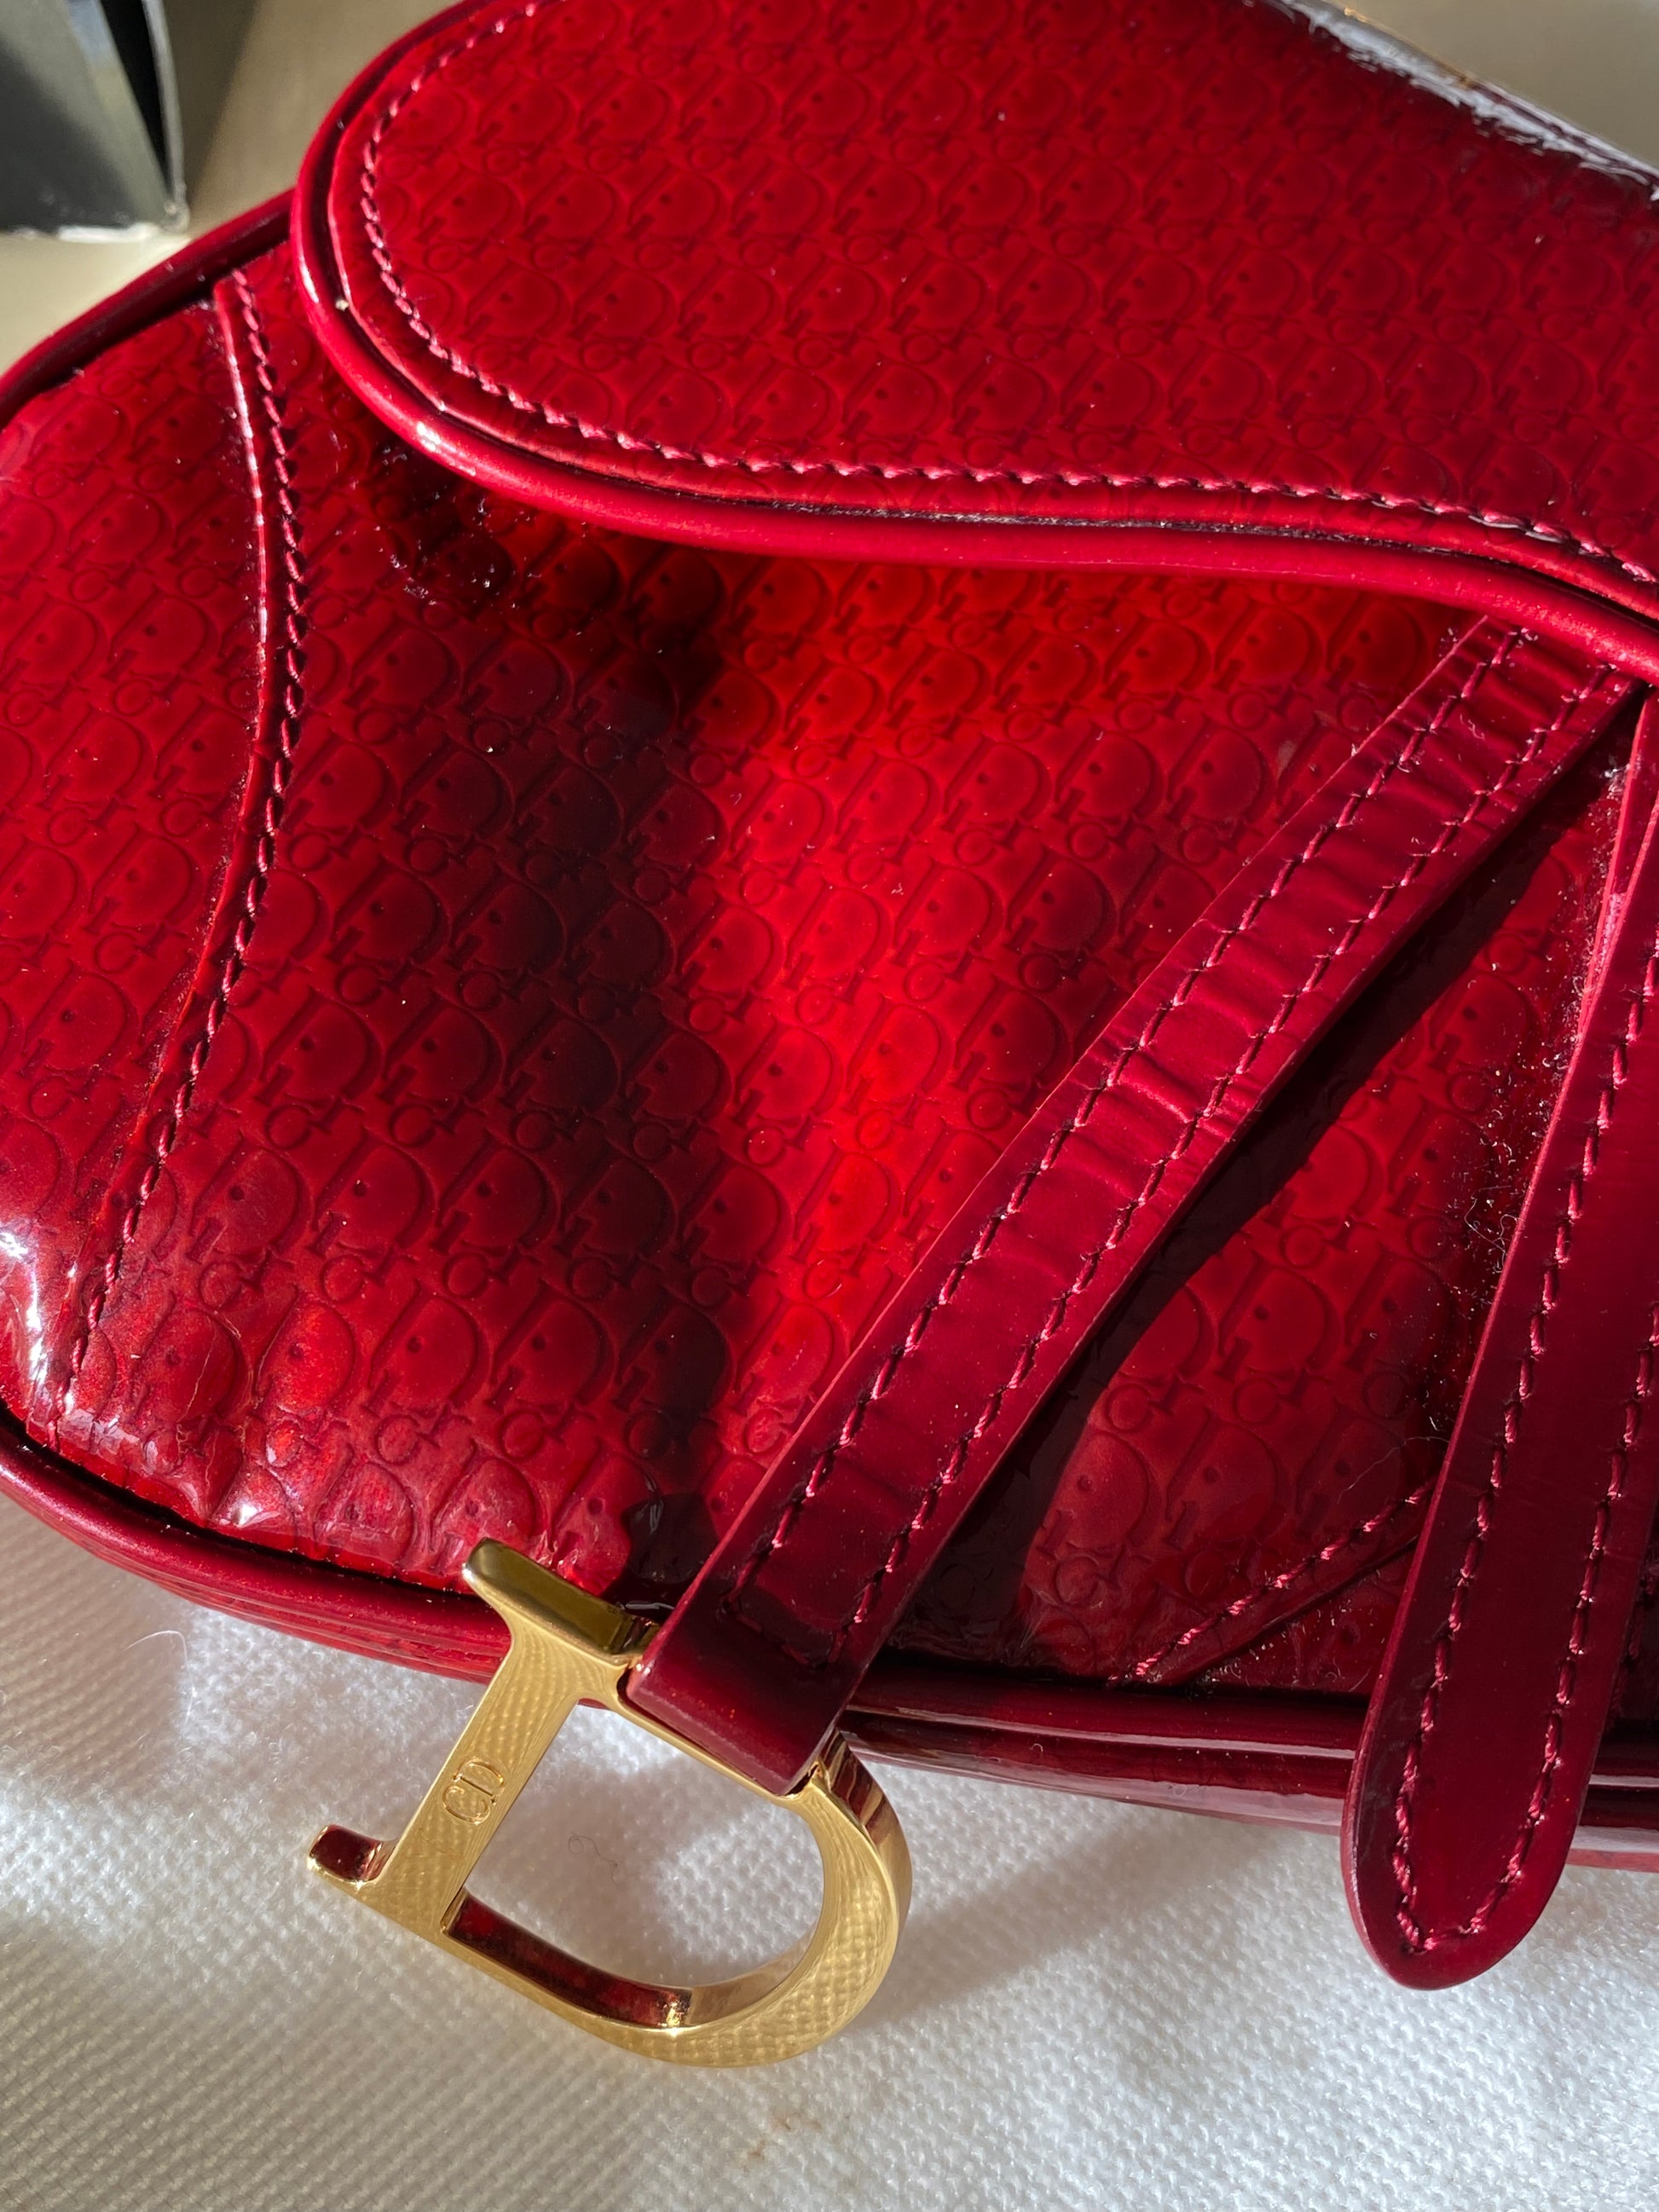 Vintage Mini Dior saddle bag – Theragrefinery